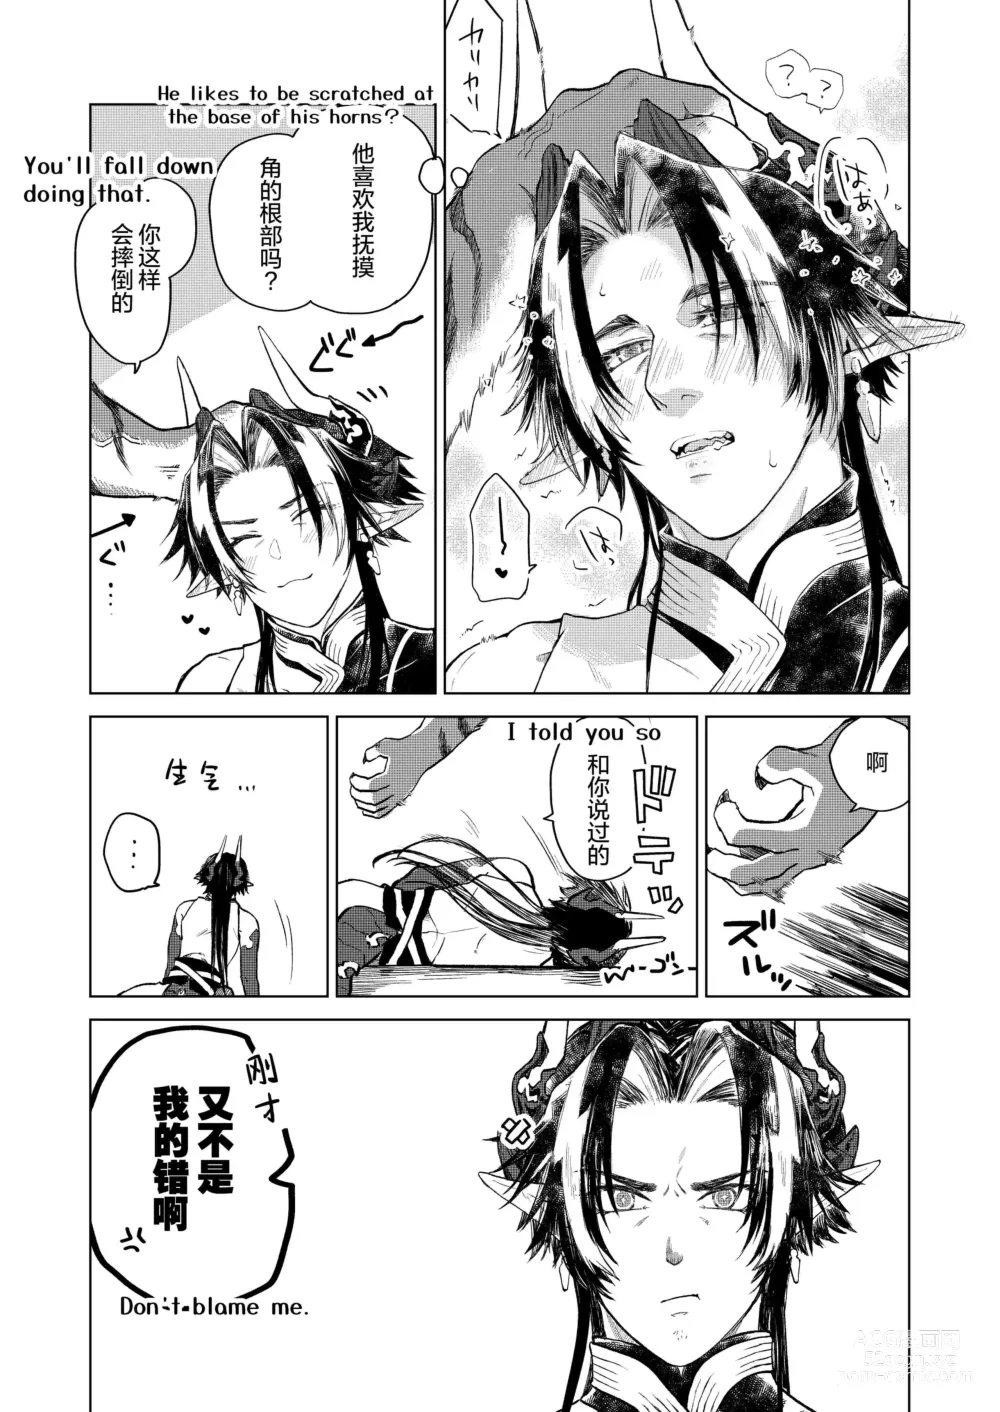 Page 36 of doujinshi 虎龙戏画